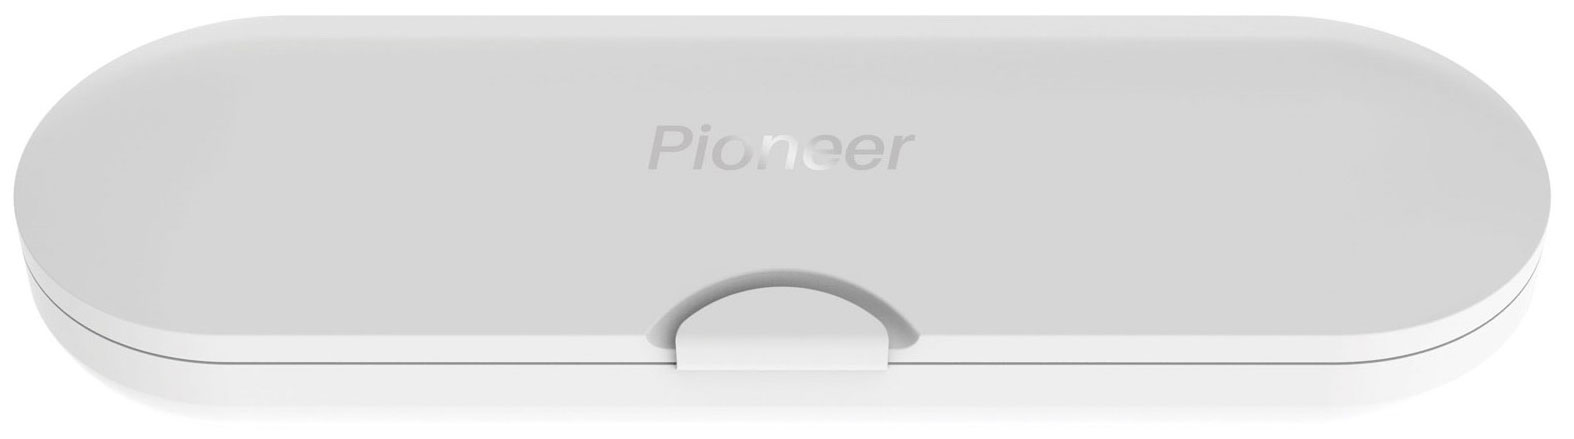 Зубная щетка Pioneer TB-5020 зубная щетка pioneer tb 1012 1 шт